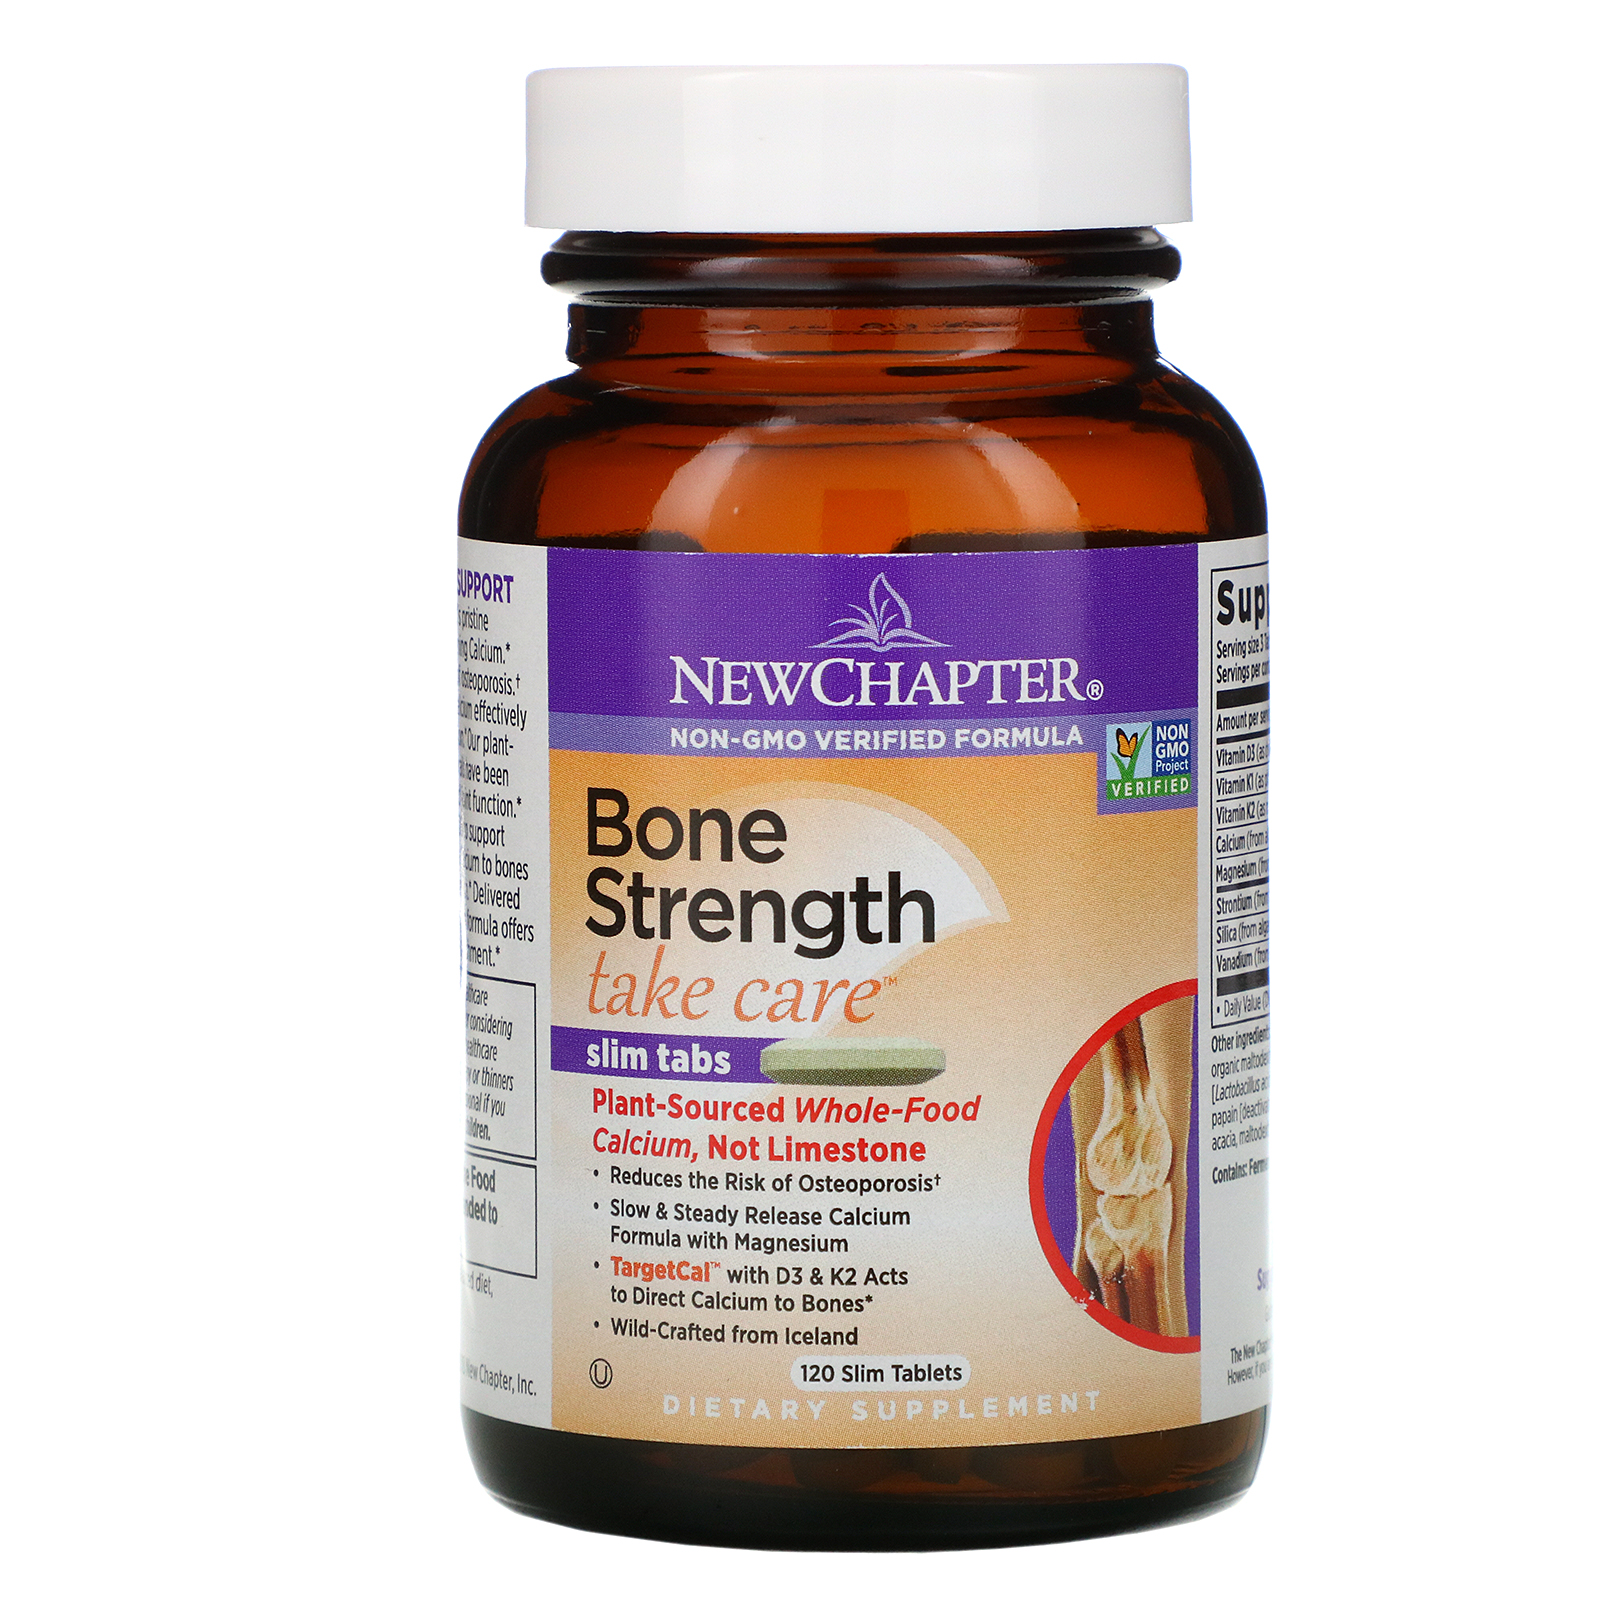 Bone support